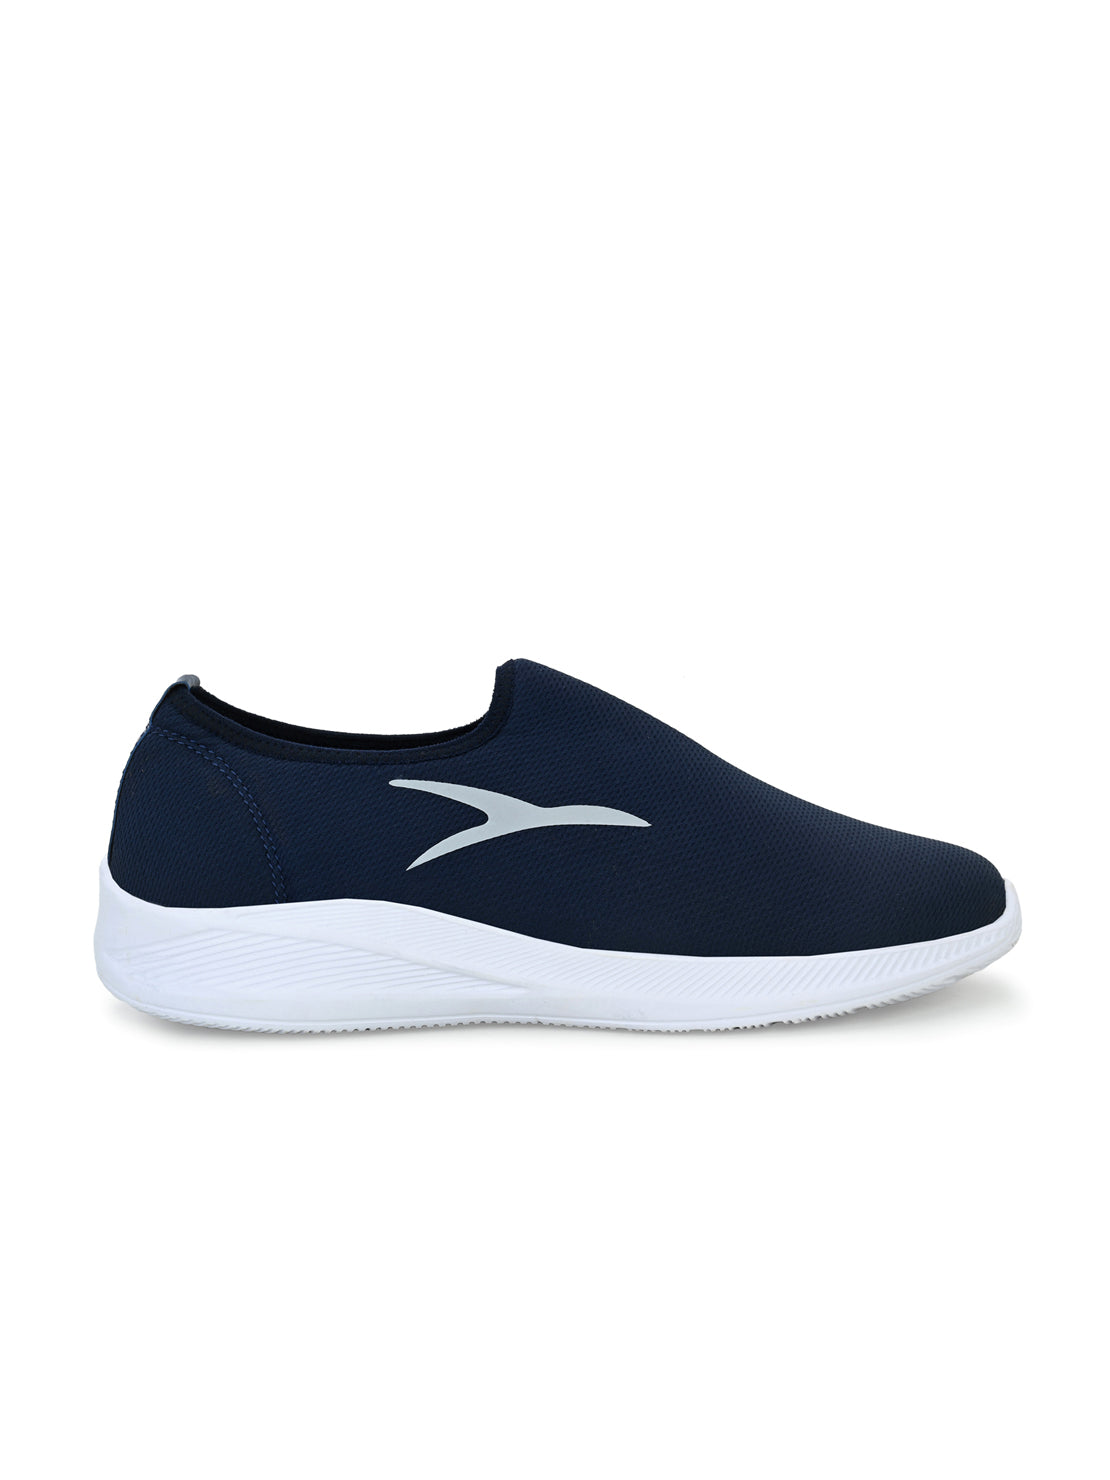 Hirolas® Men's Blue Mesh Walking Sport Shoes (HRL2028BLU)